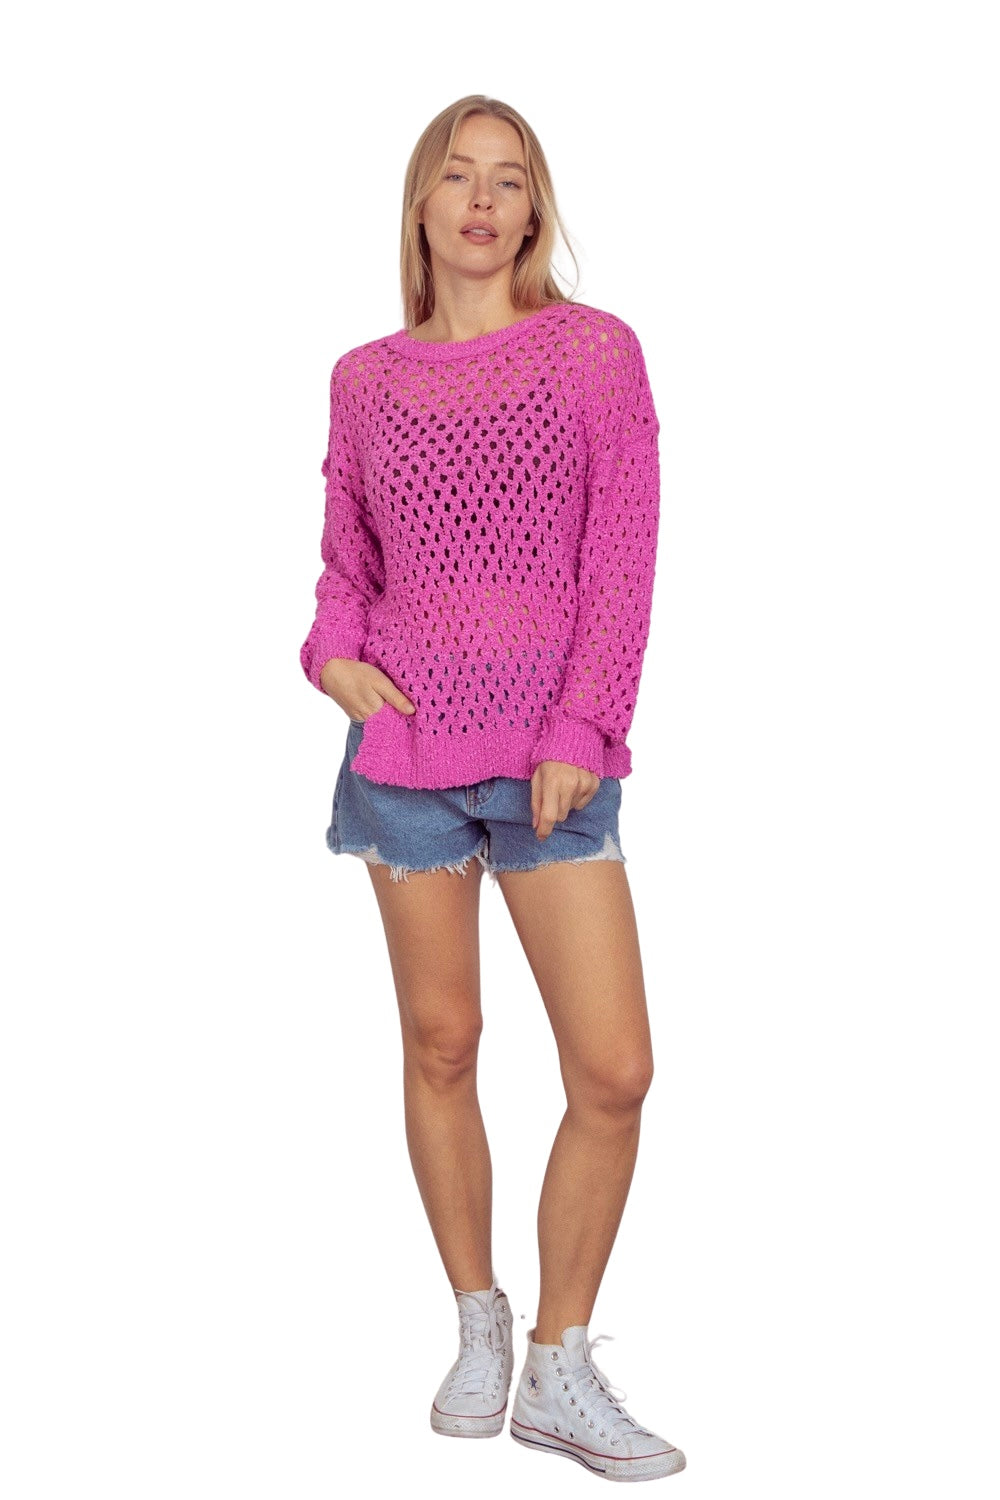 Hold Me Crochet Open Knit Crochet Oversized Top-Pink